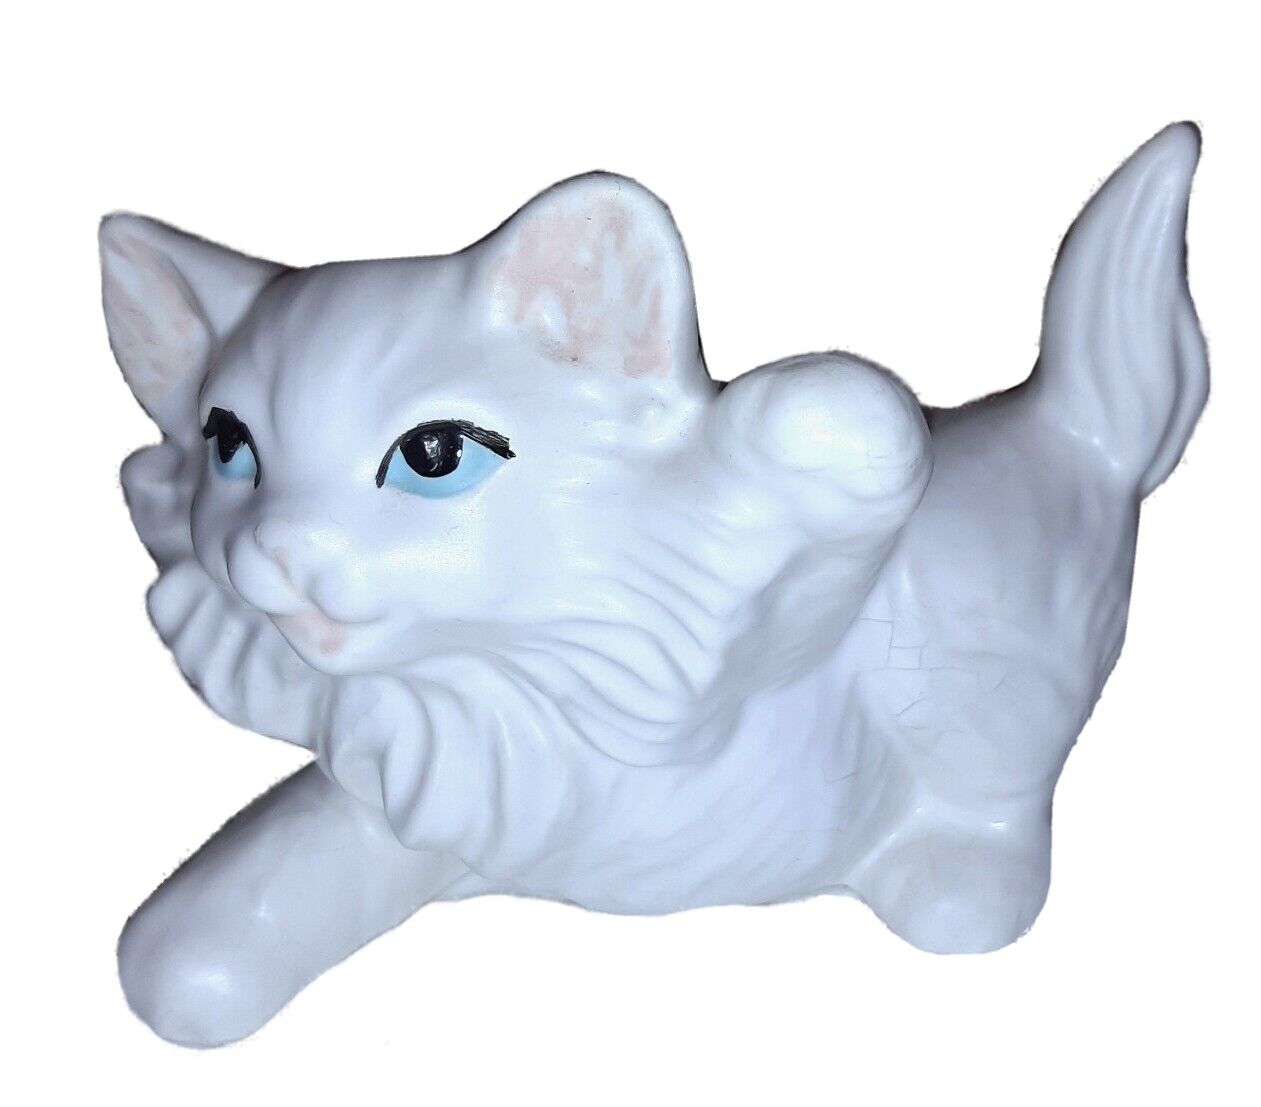 Vintage Persian Kitten Lefton Ceamic Figurine White Cat 4.5 x 6